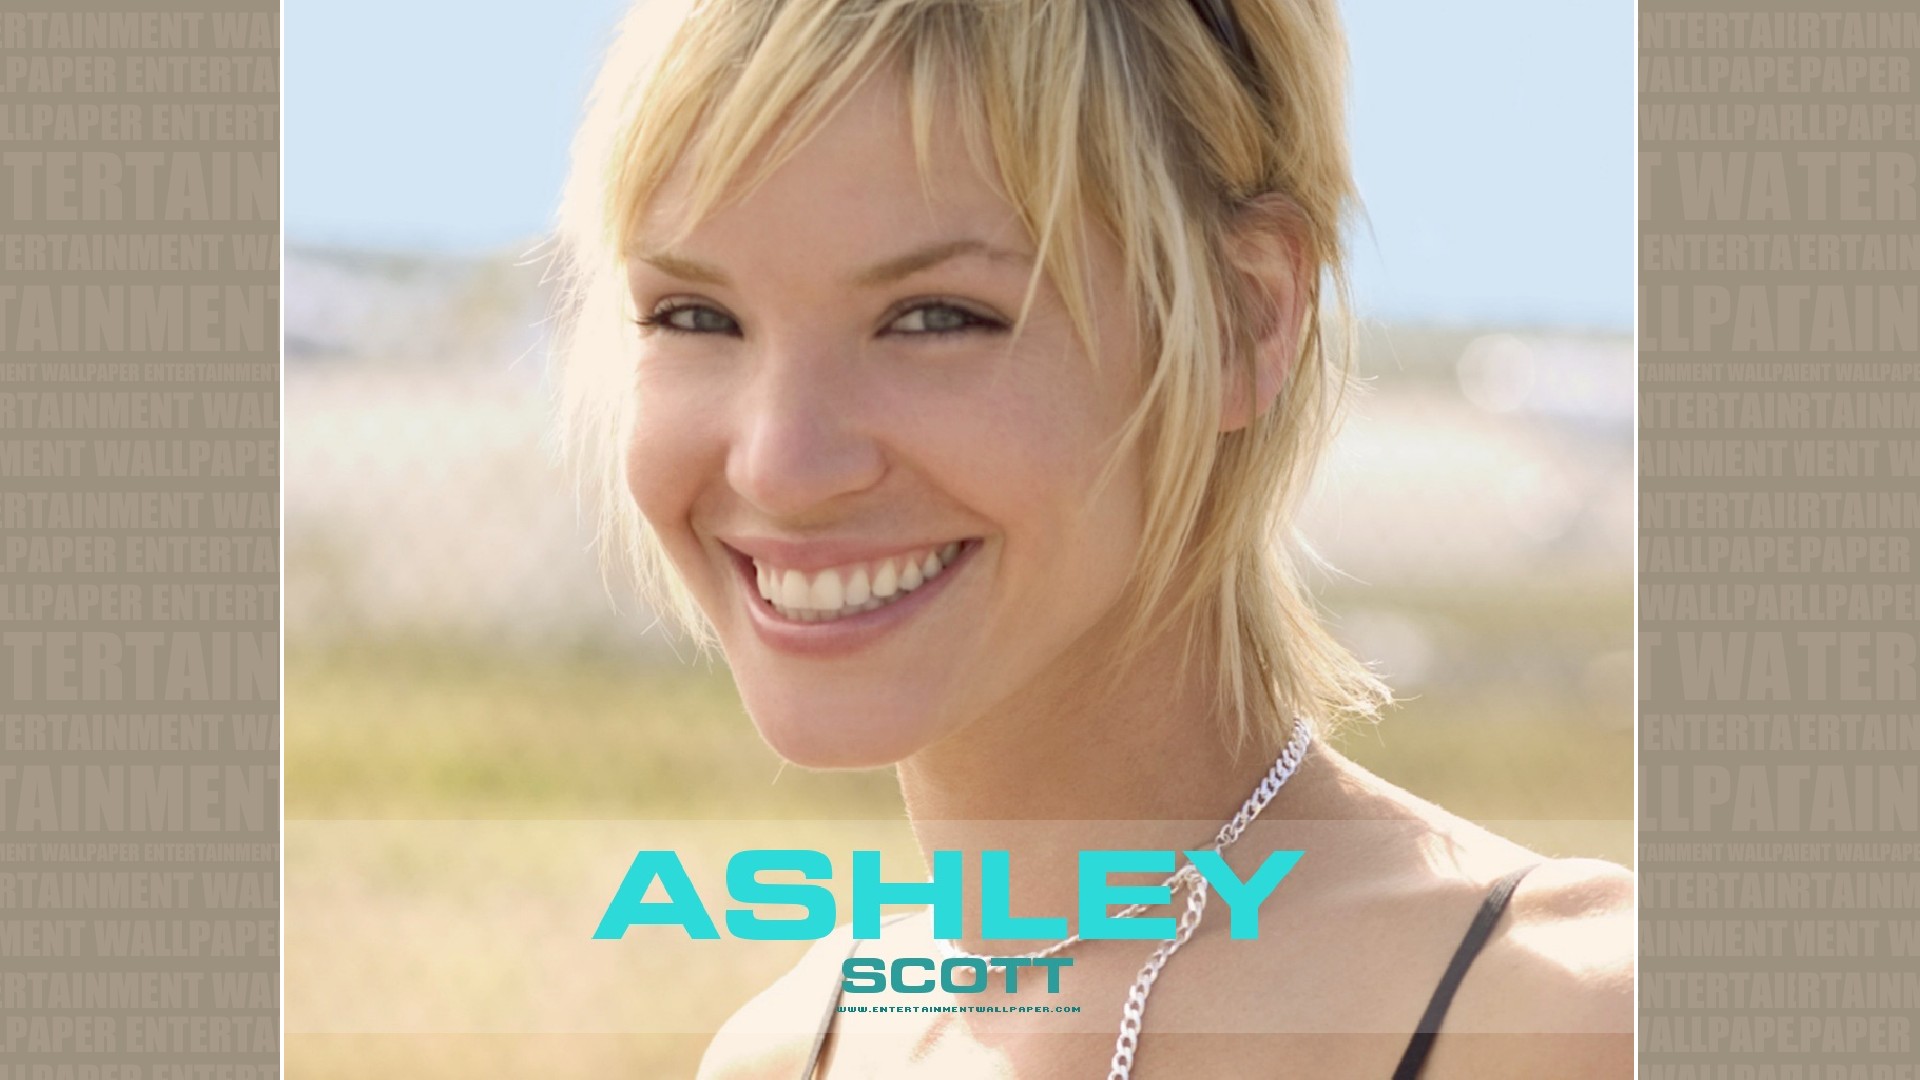 Pictures Of Ashley Scott Celebrities